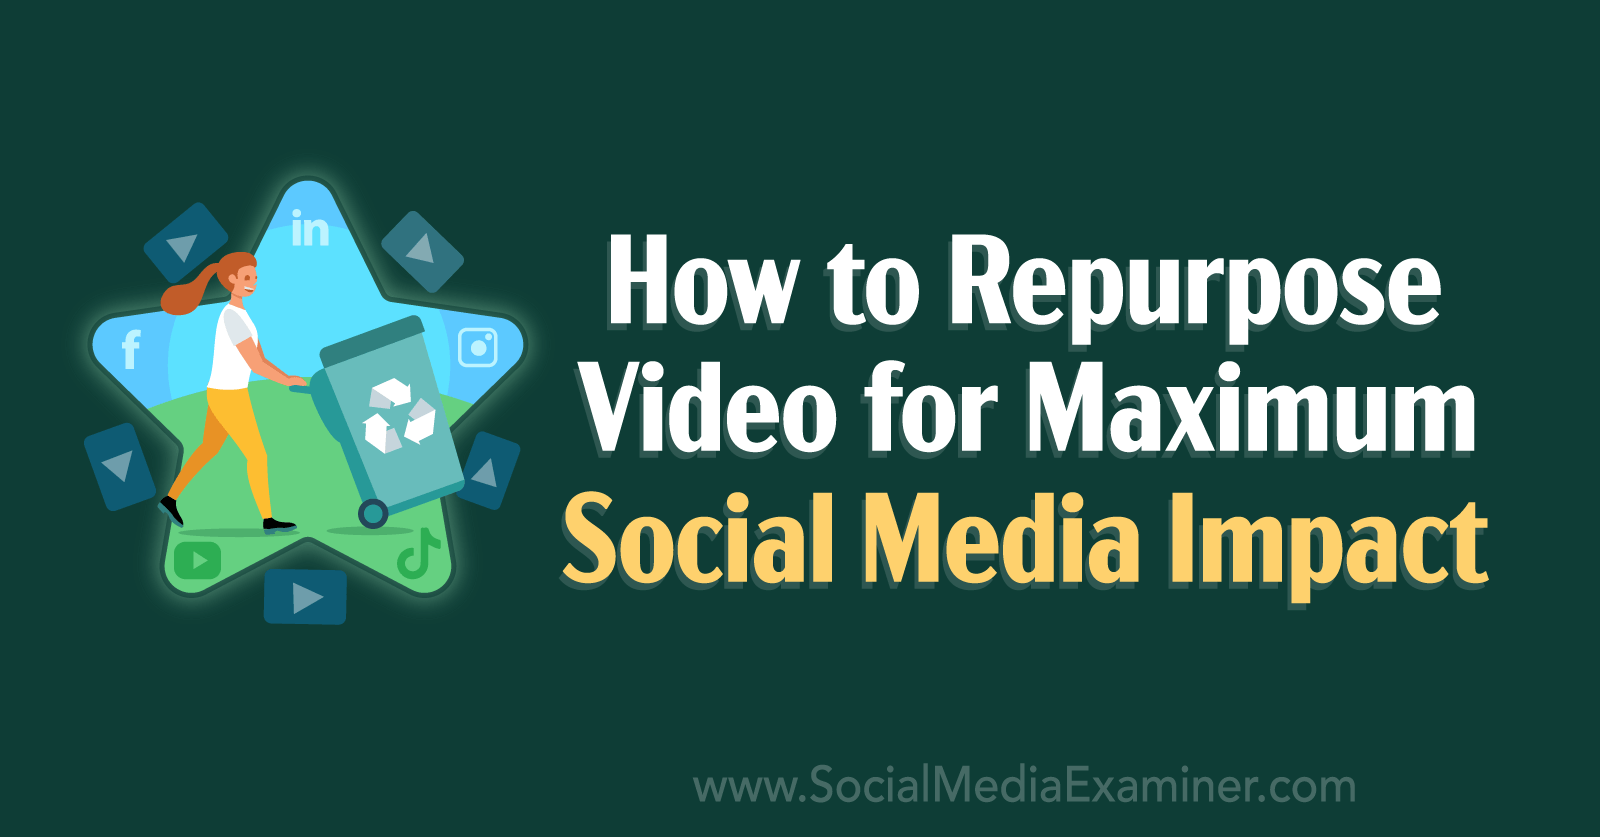 How to Repurpose Video for Maximum Social Media Impact by Social Media Examiner